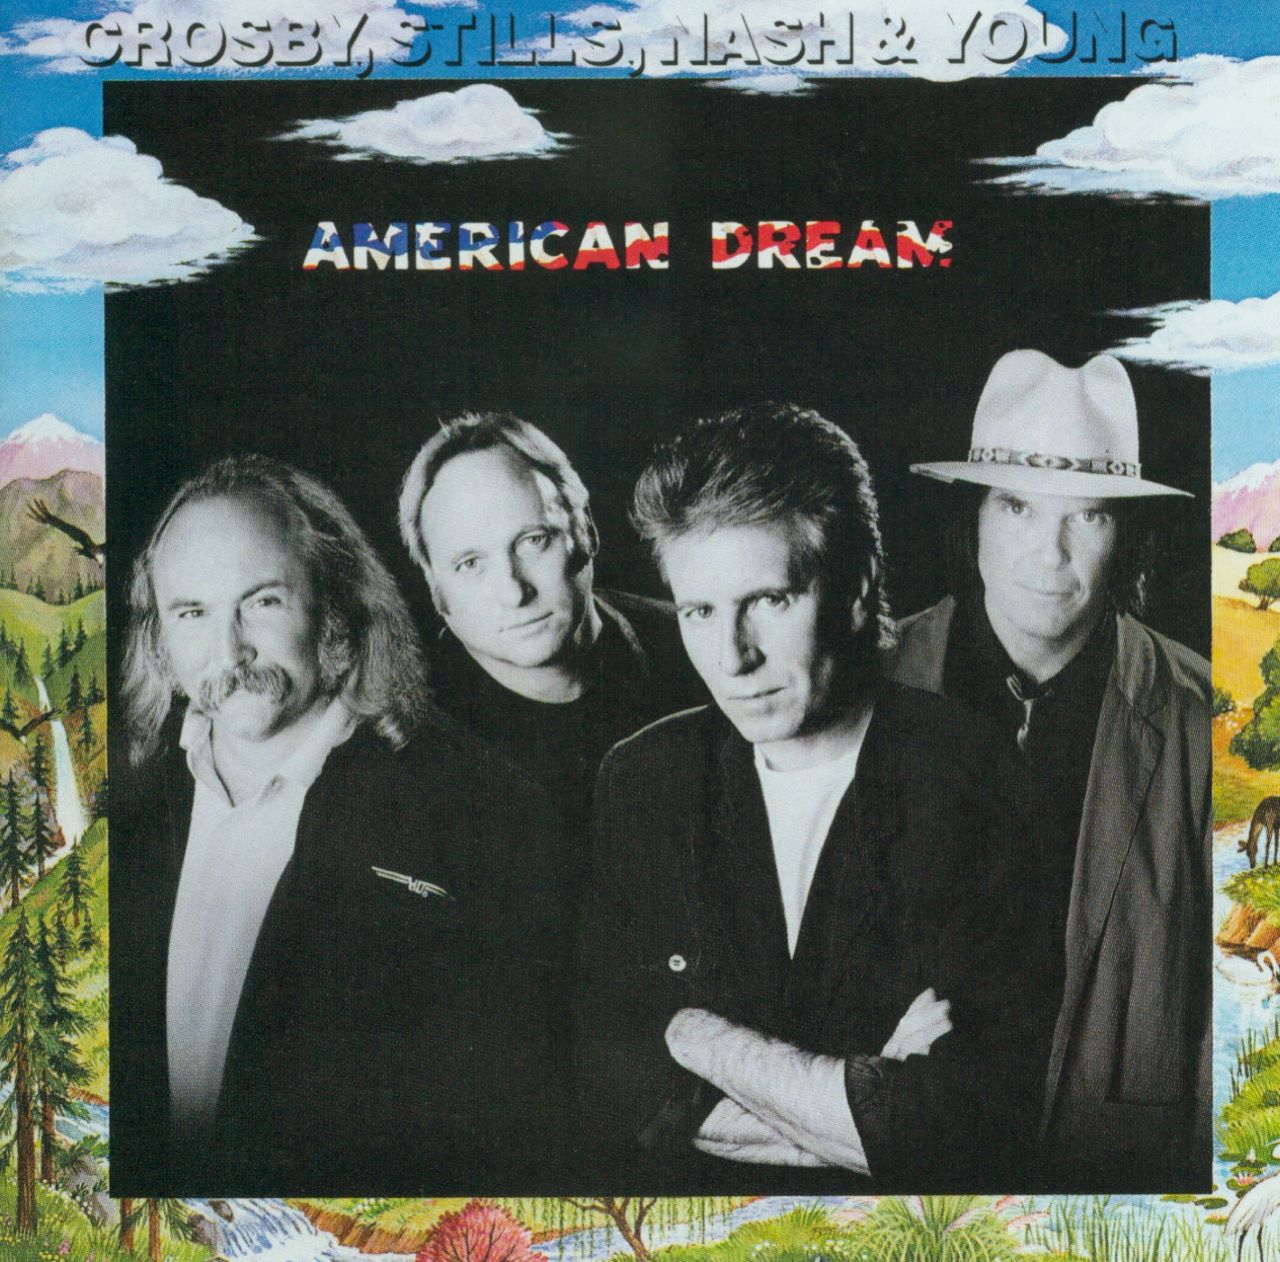 Crosby, Stills, Nash & Young - American Dream cover album